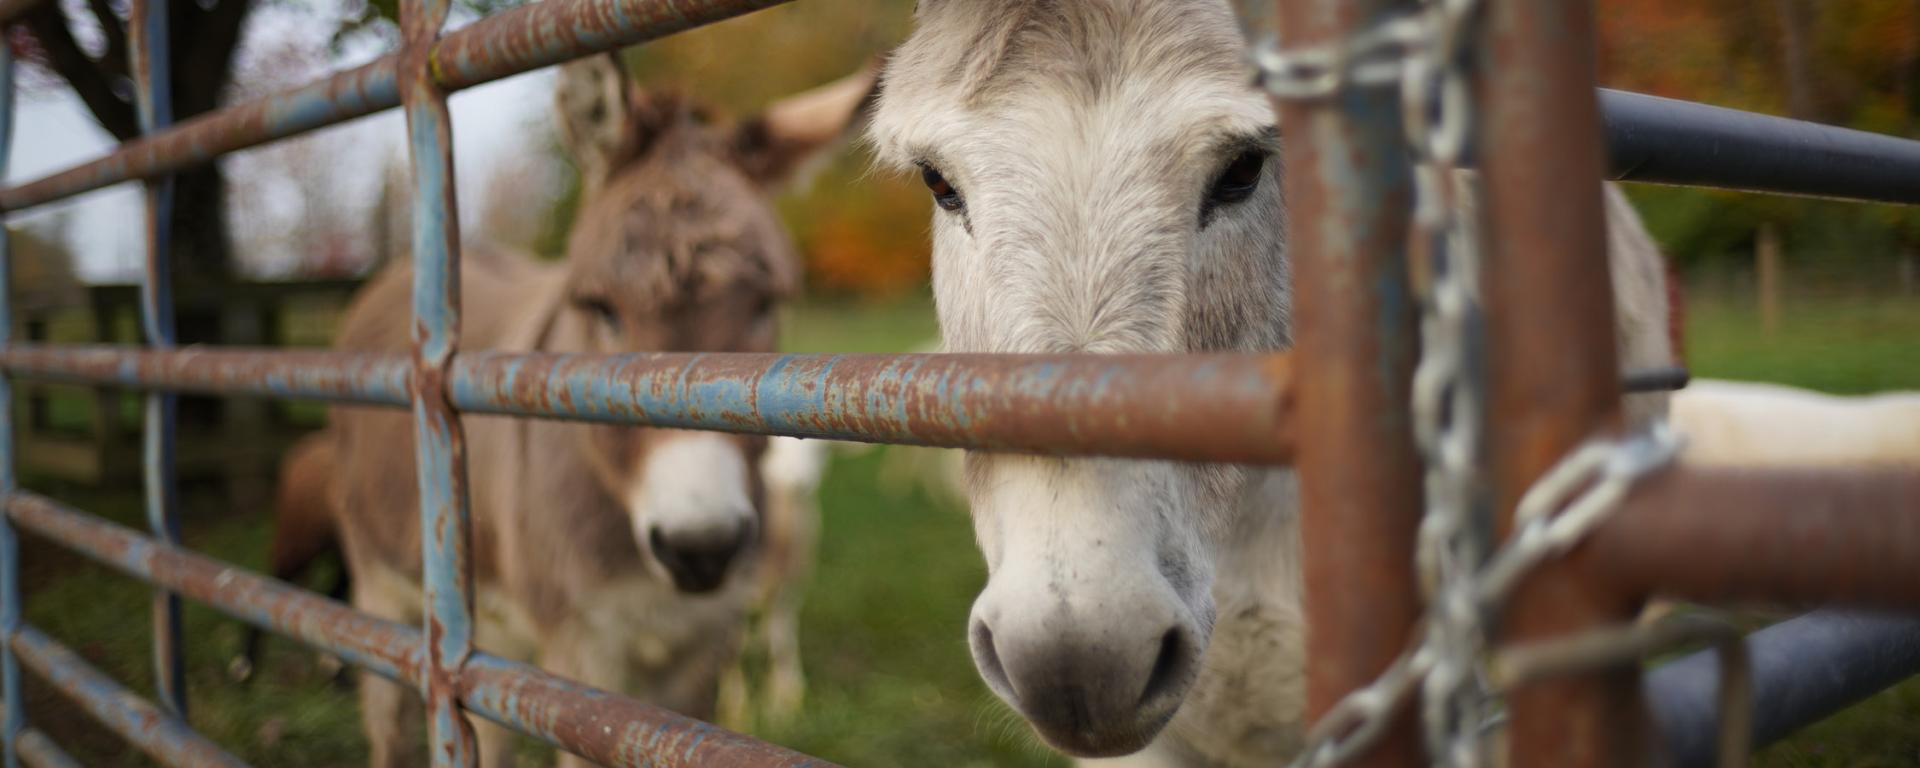 close up shot of a donkey peeking through a gate